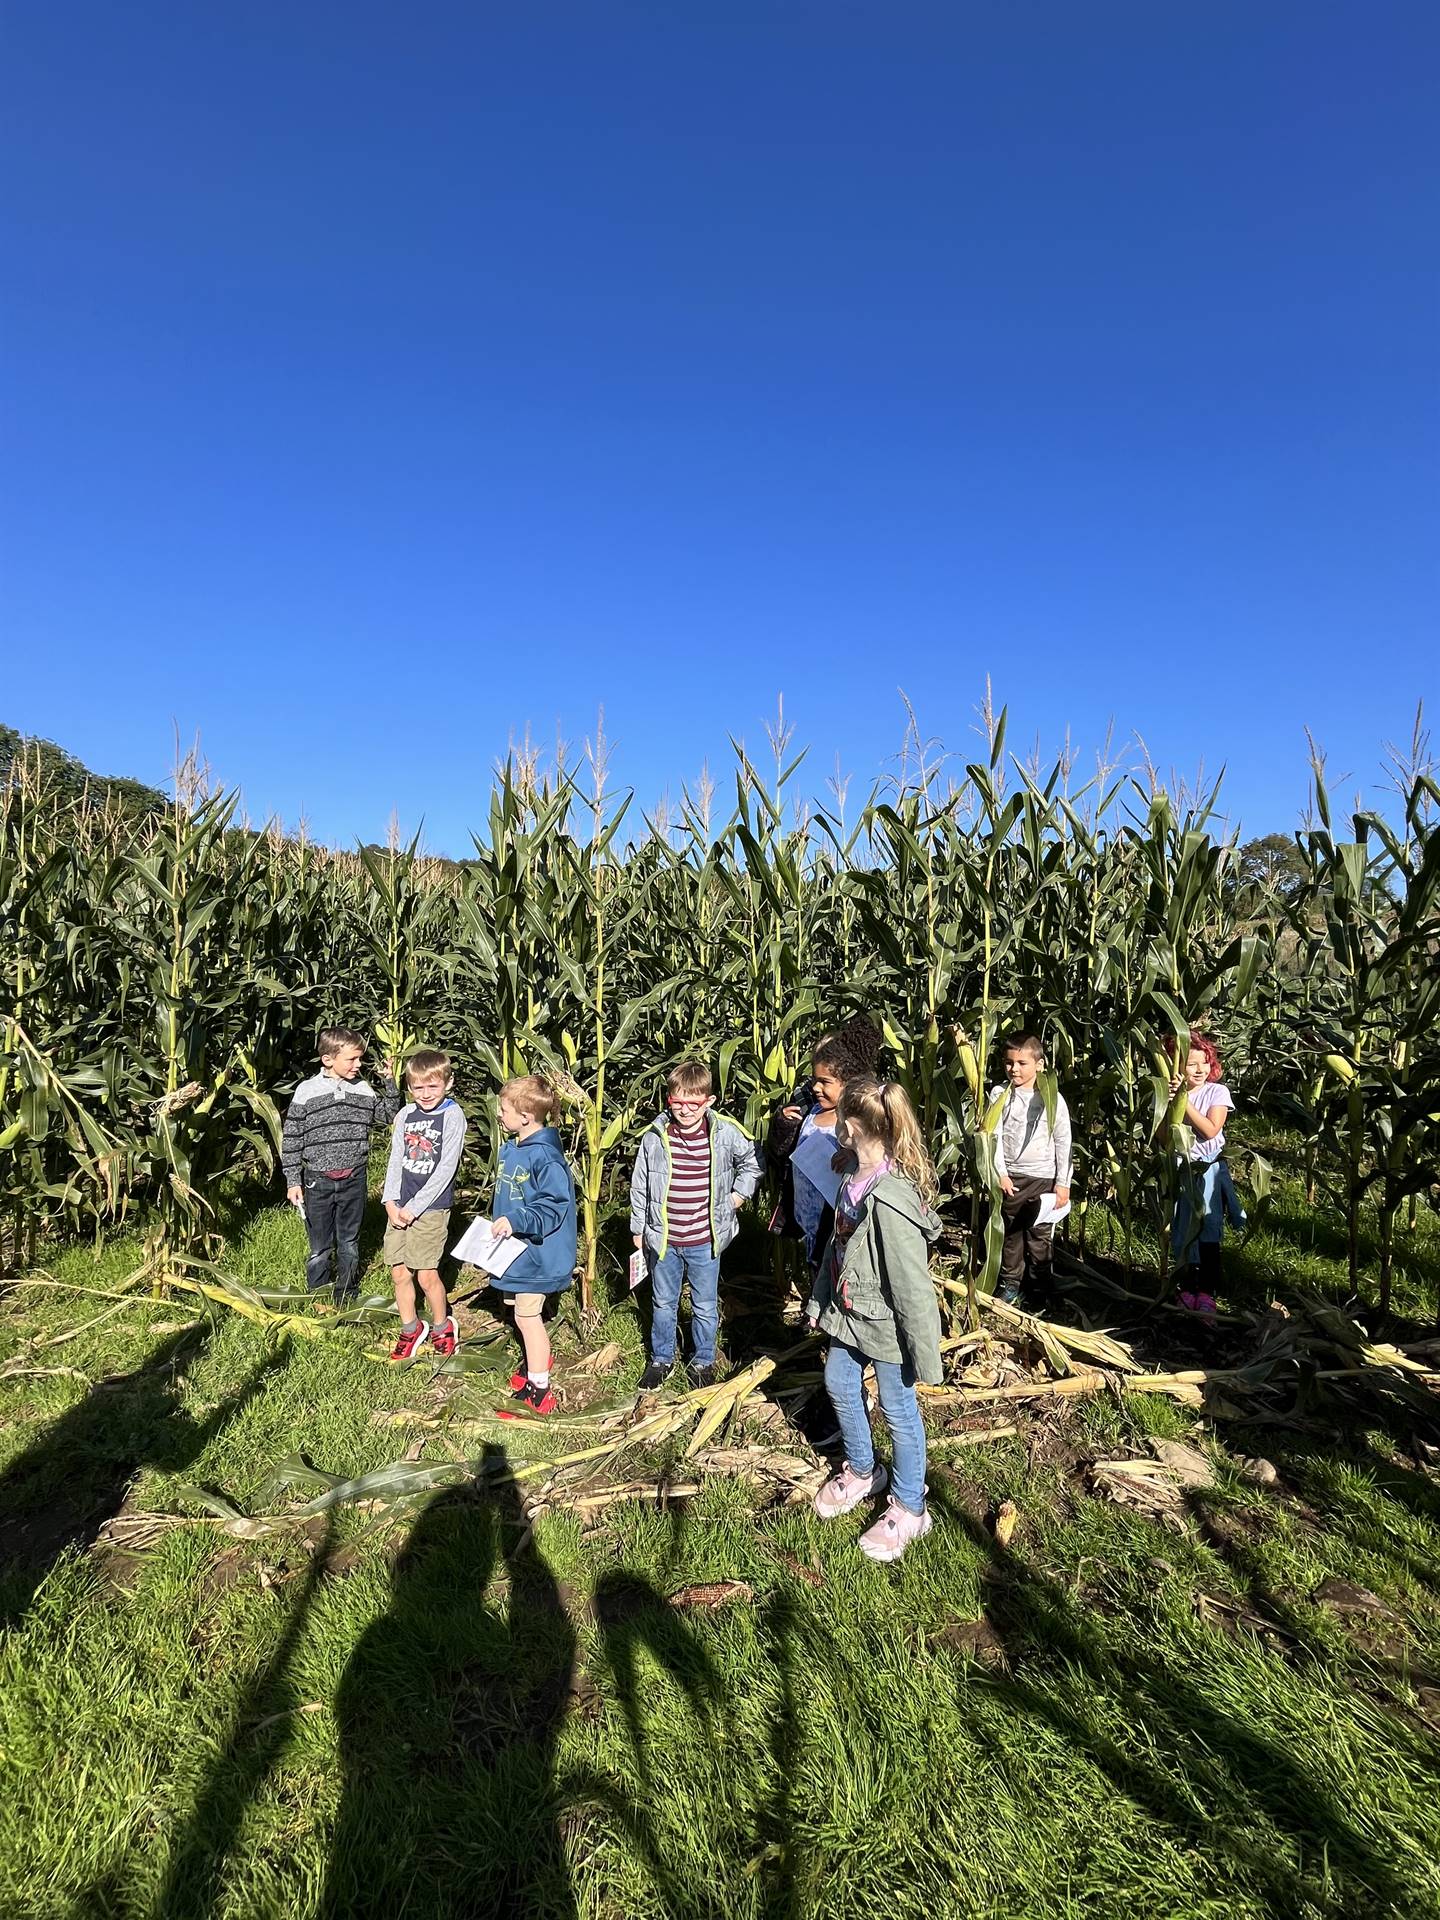 students in a corn field.